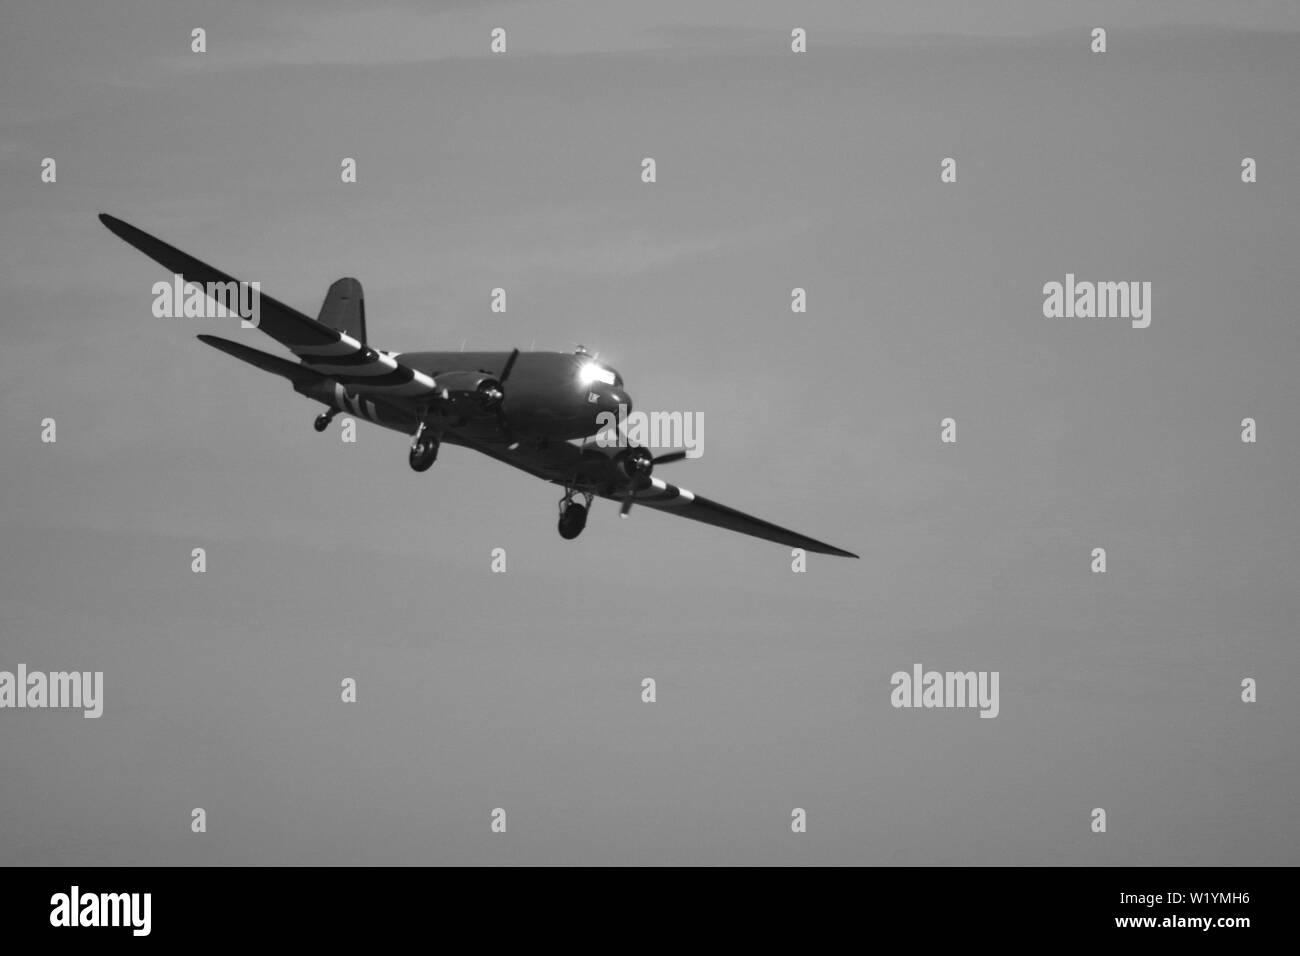 C 47 skytrain plane Black and White Stock Photos & Images - Alamy